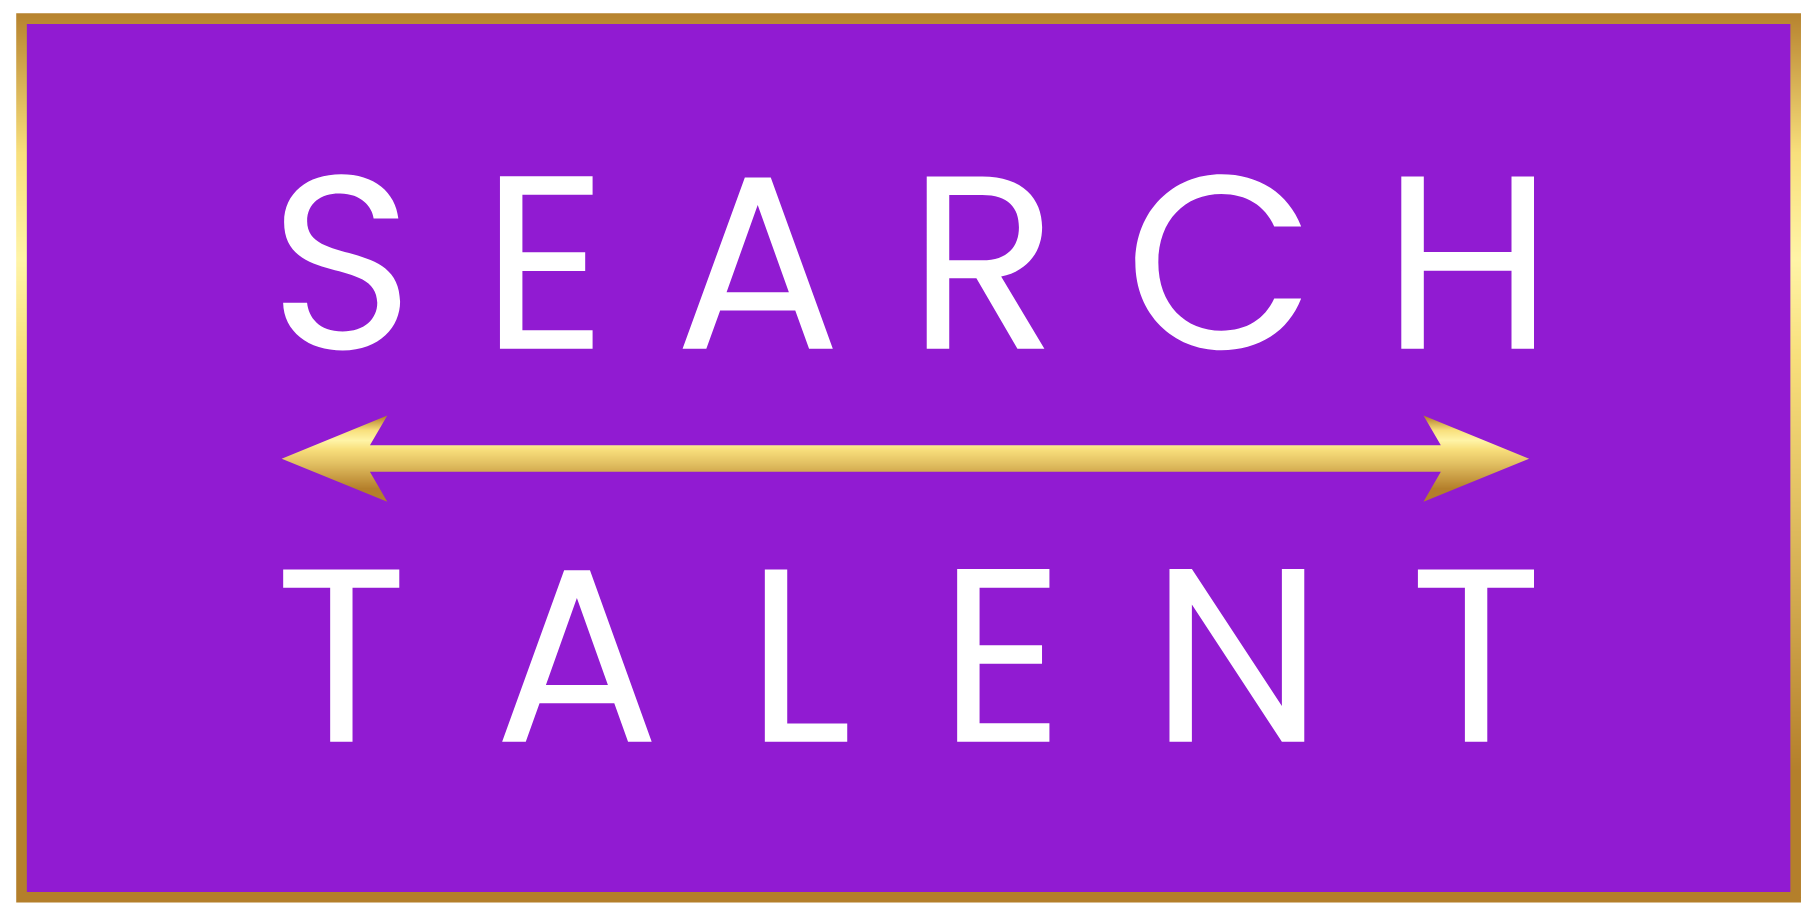 Search Talent logo